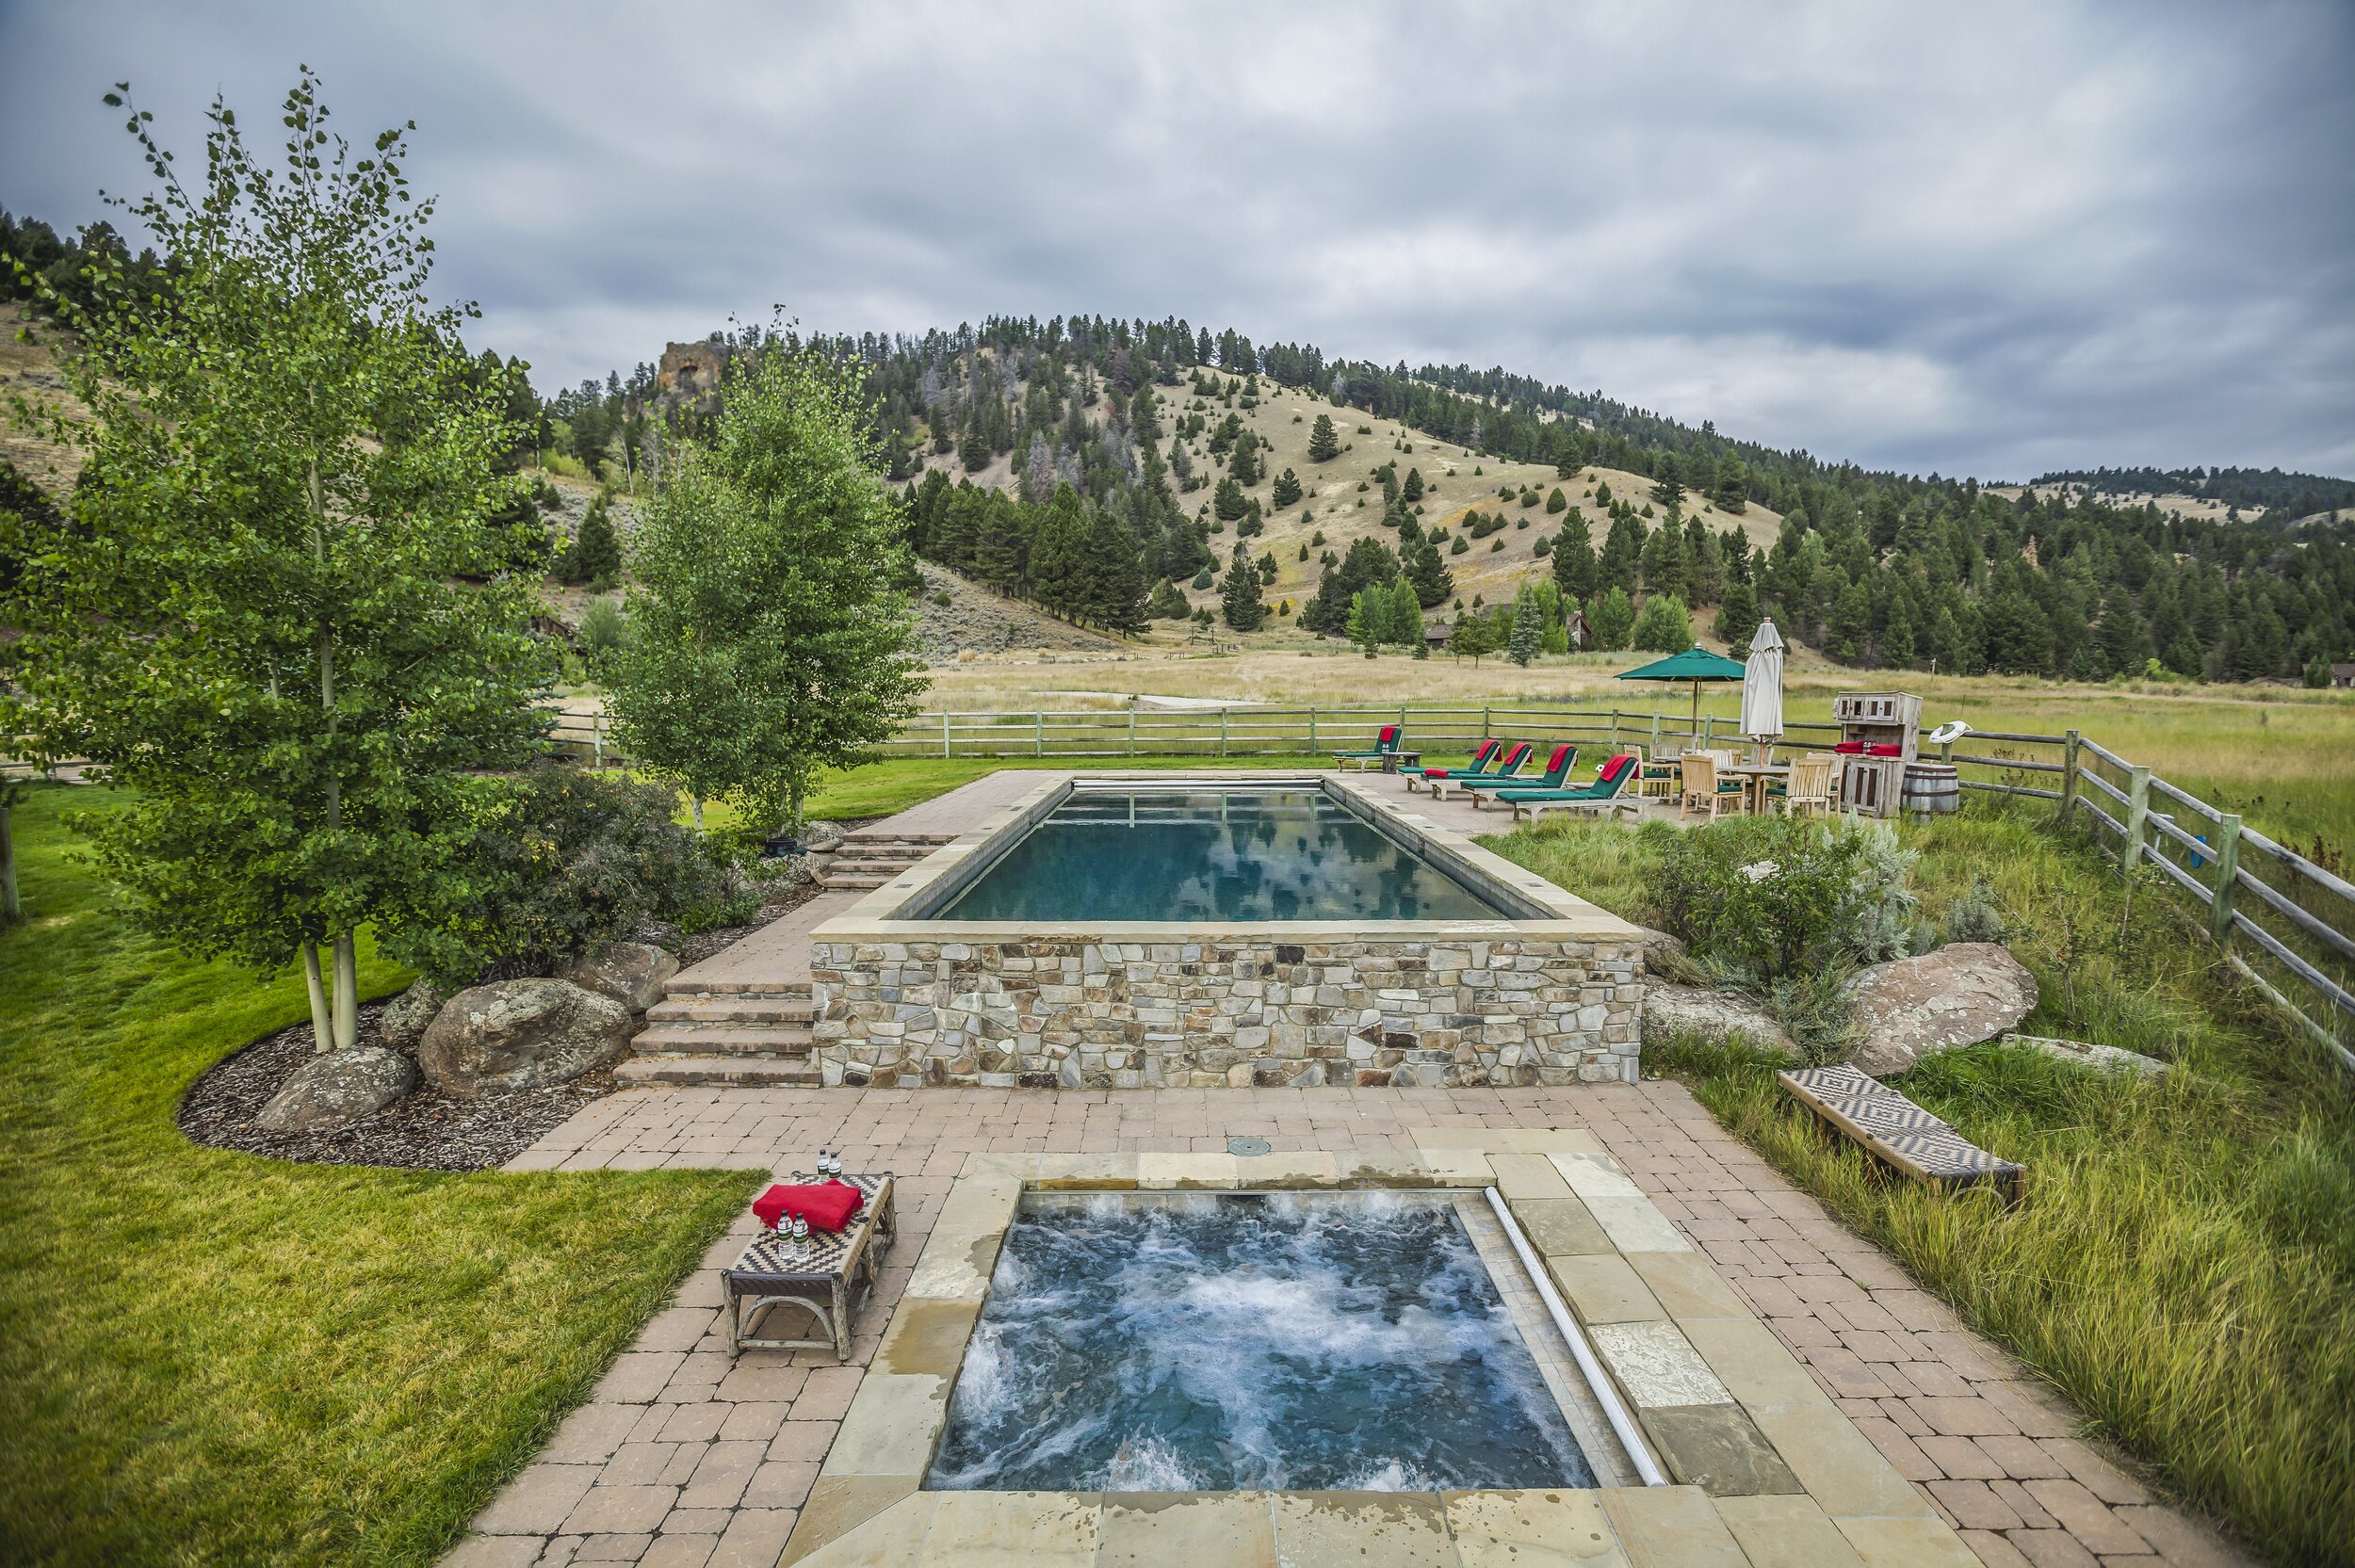   Outdoor pool and hot tub (photo credit: The Ranch at Rock Creek)  